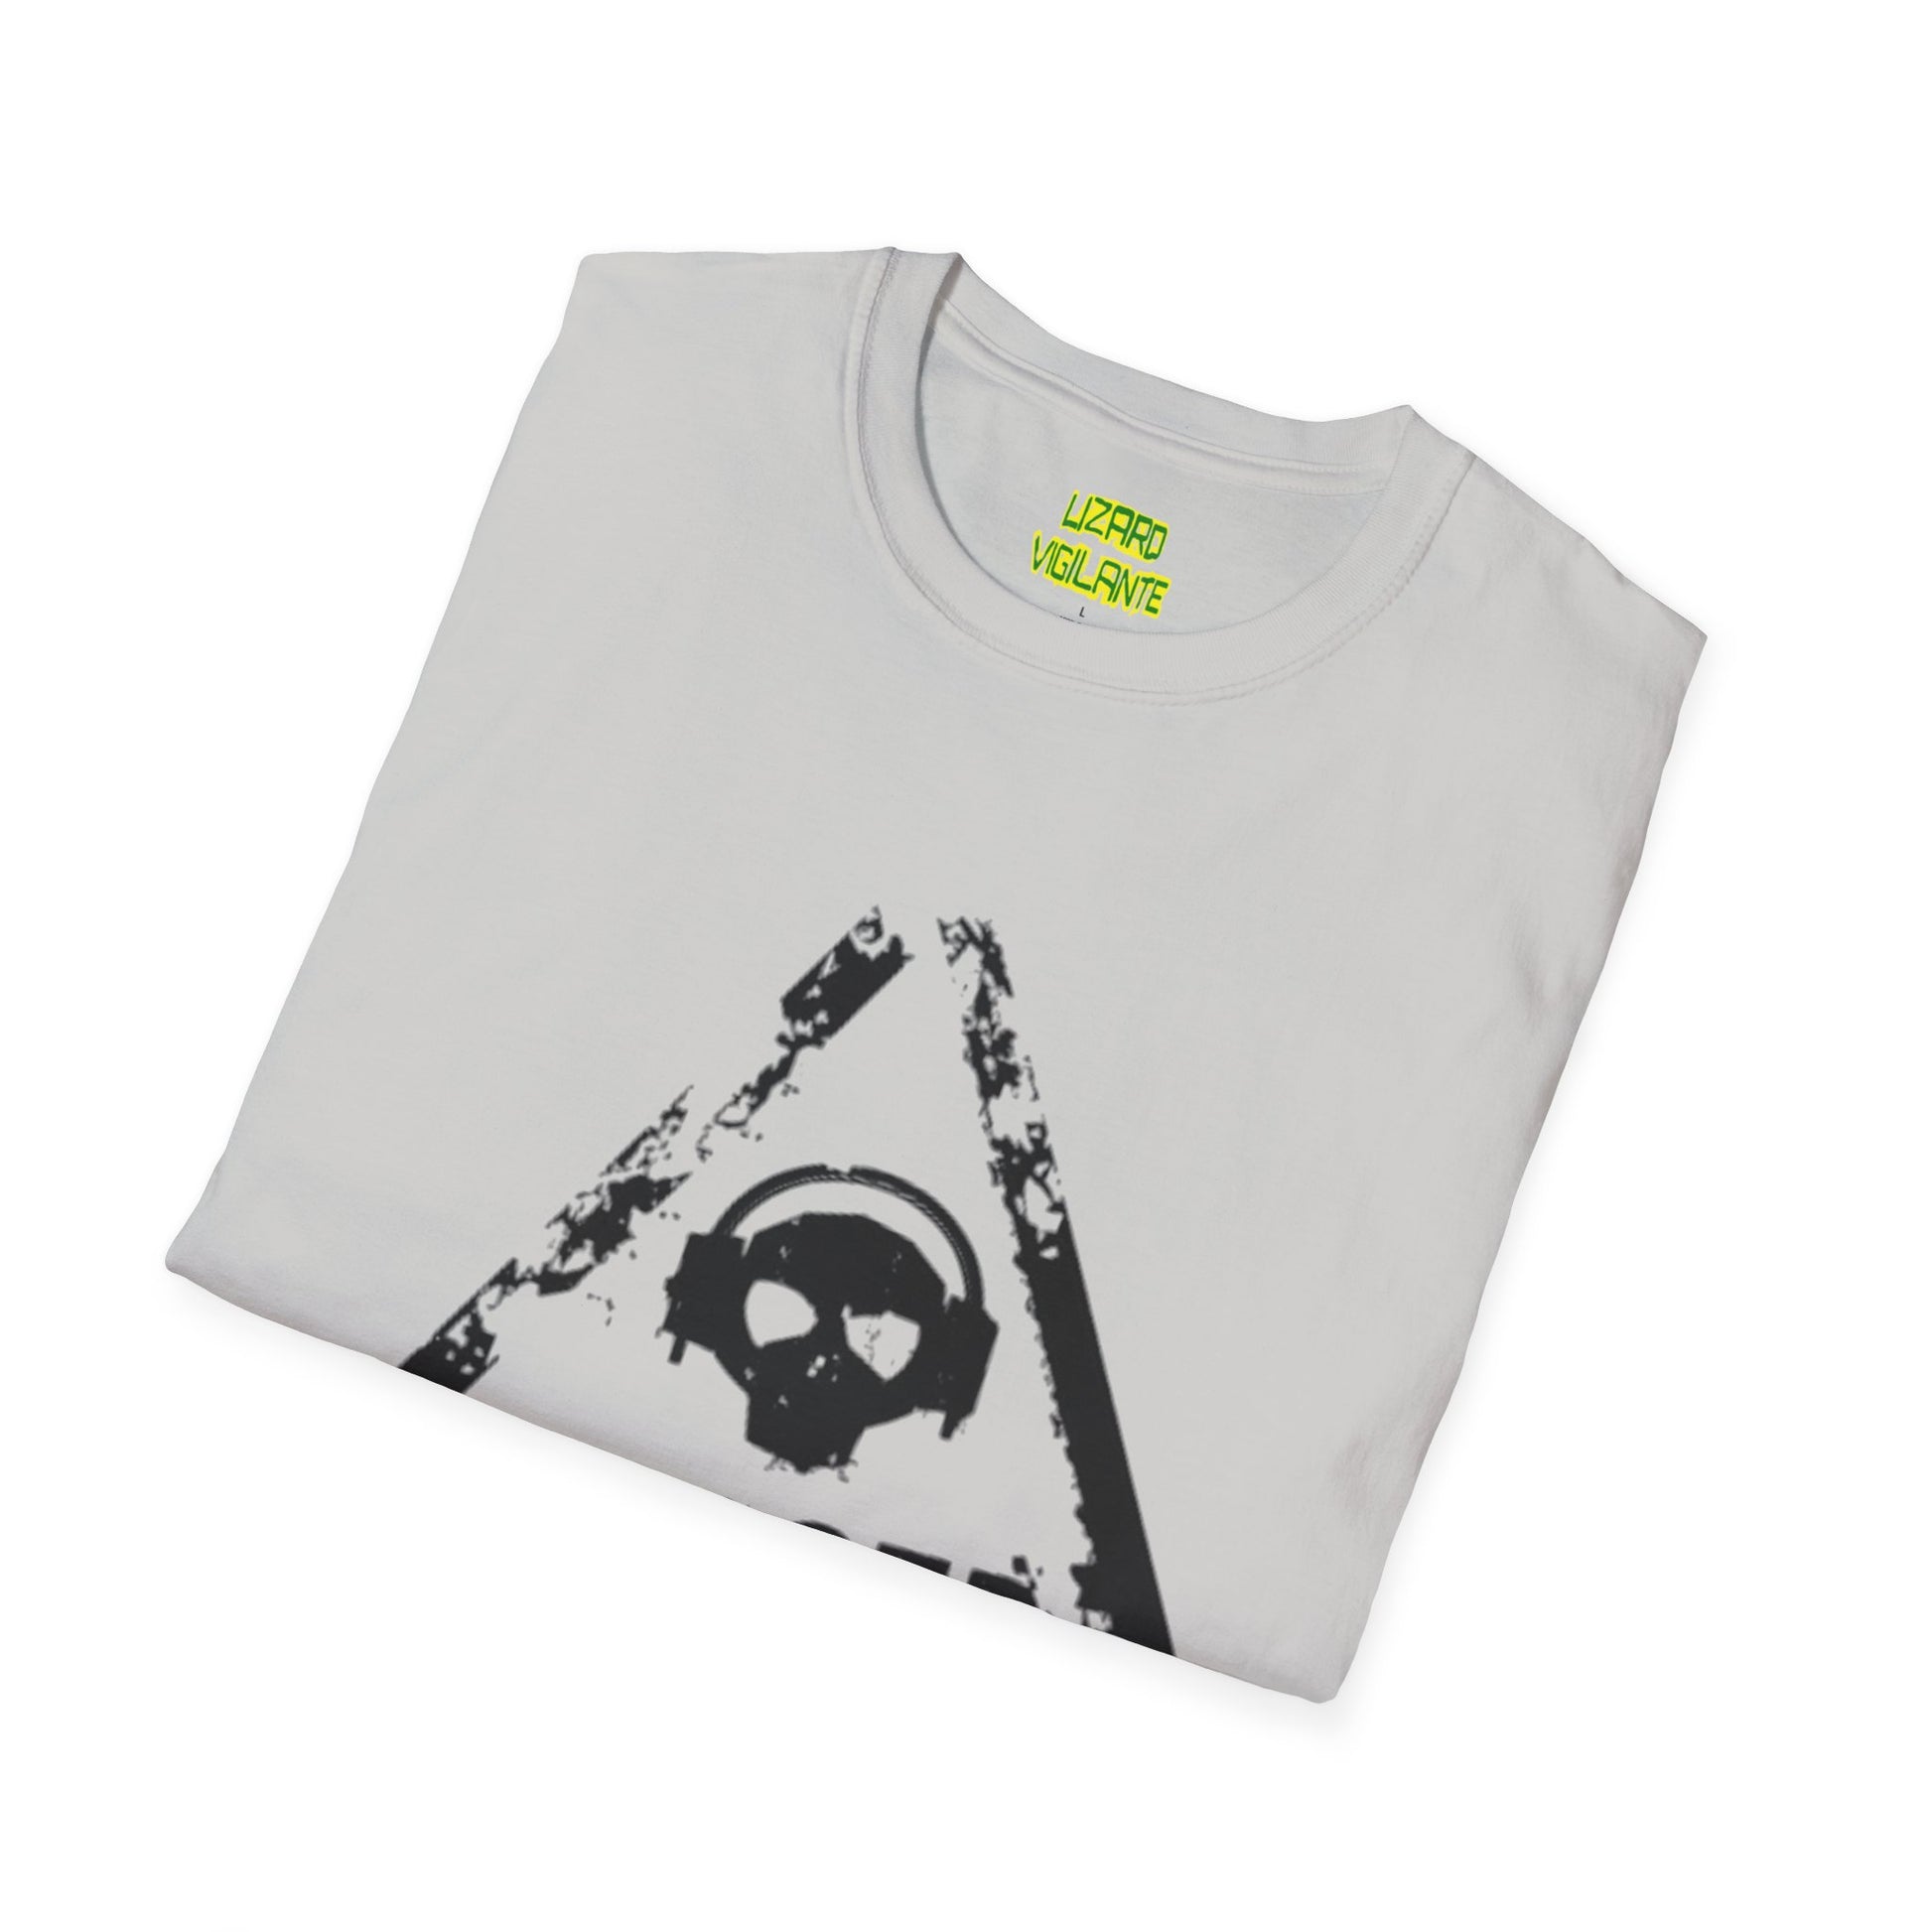 Danger Skull Unisex Softstyle T-Shirt - Lizard Vigilante